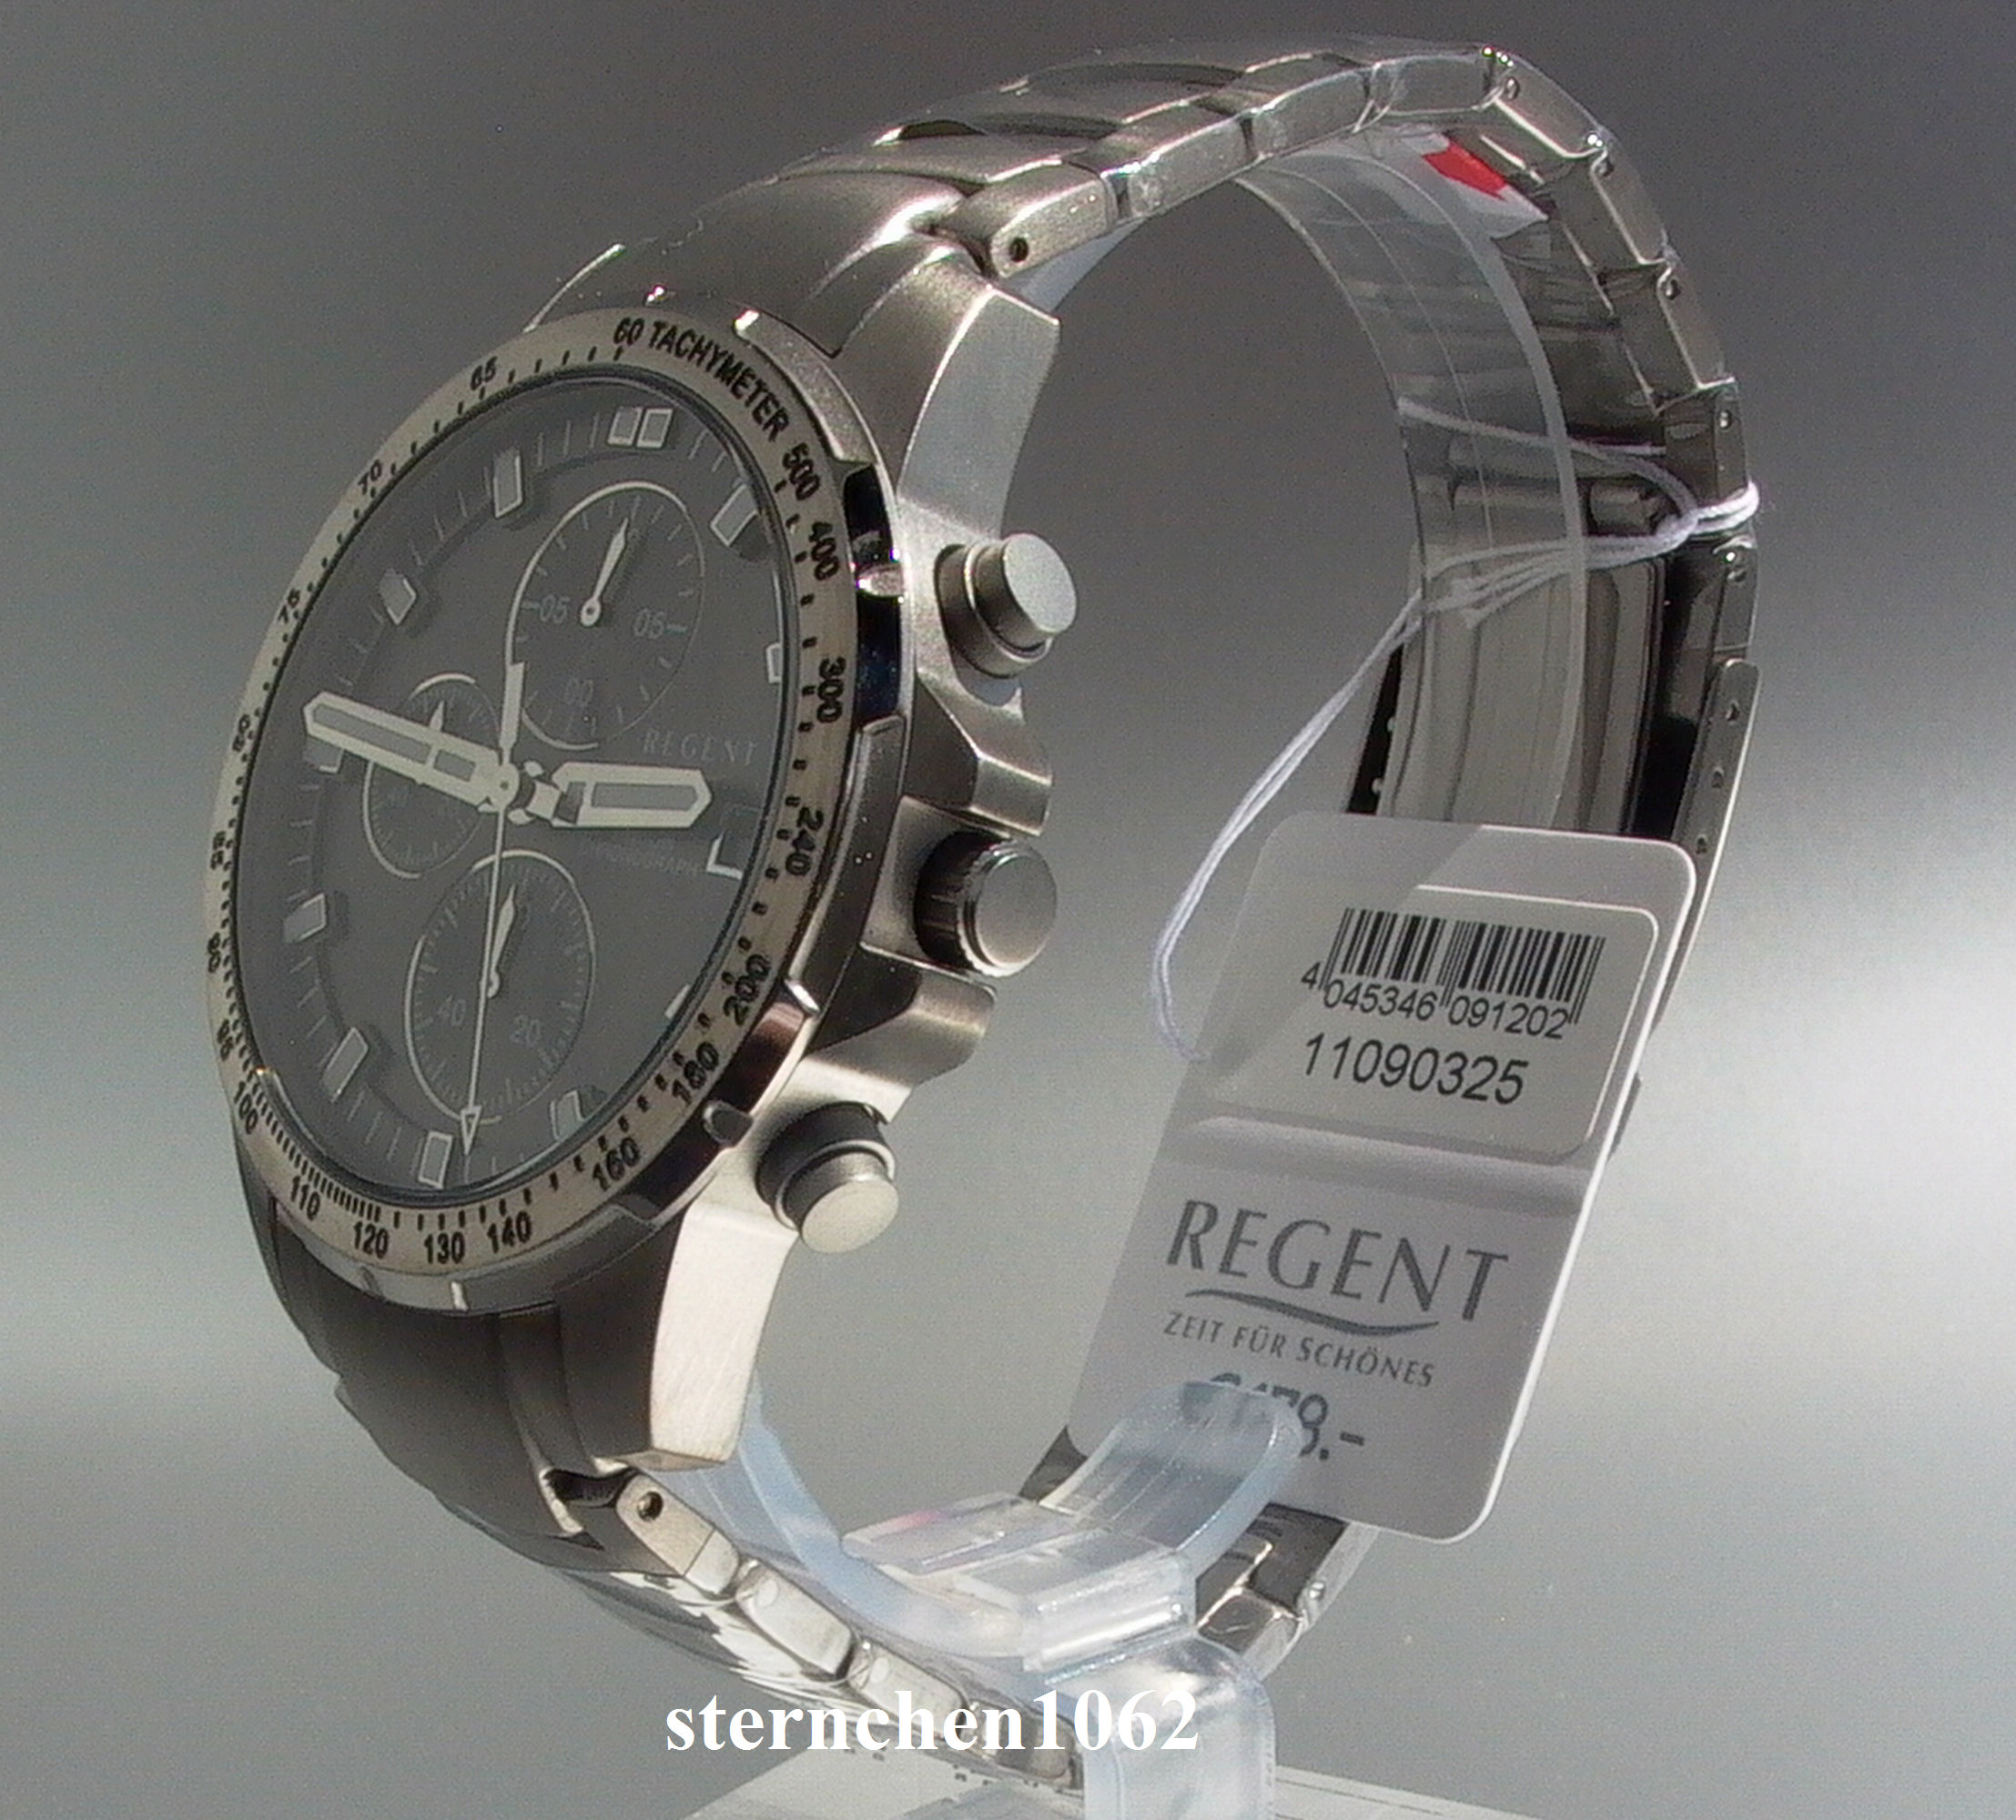 Sternchen 1062 * Regent - Herren-Armbanduhr Titan Chronograph * * * 11090325 